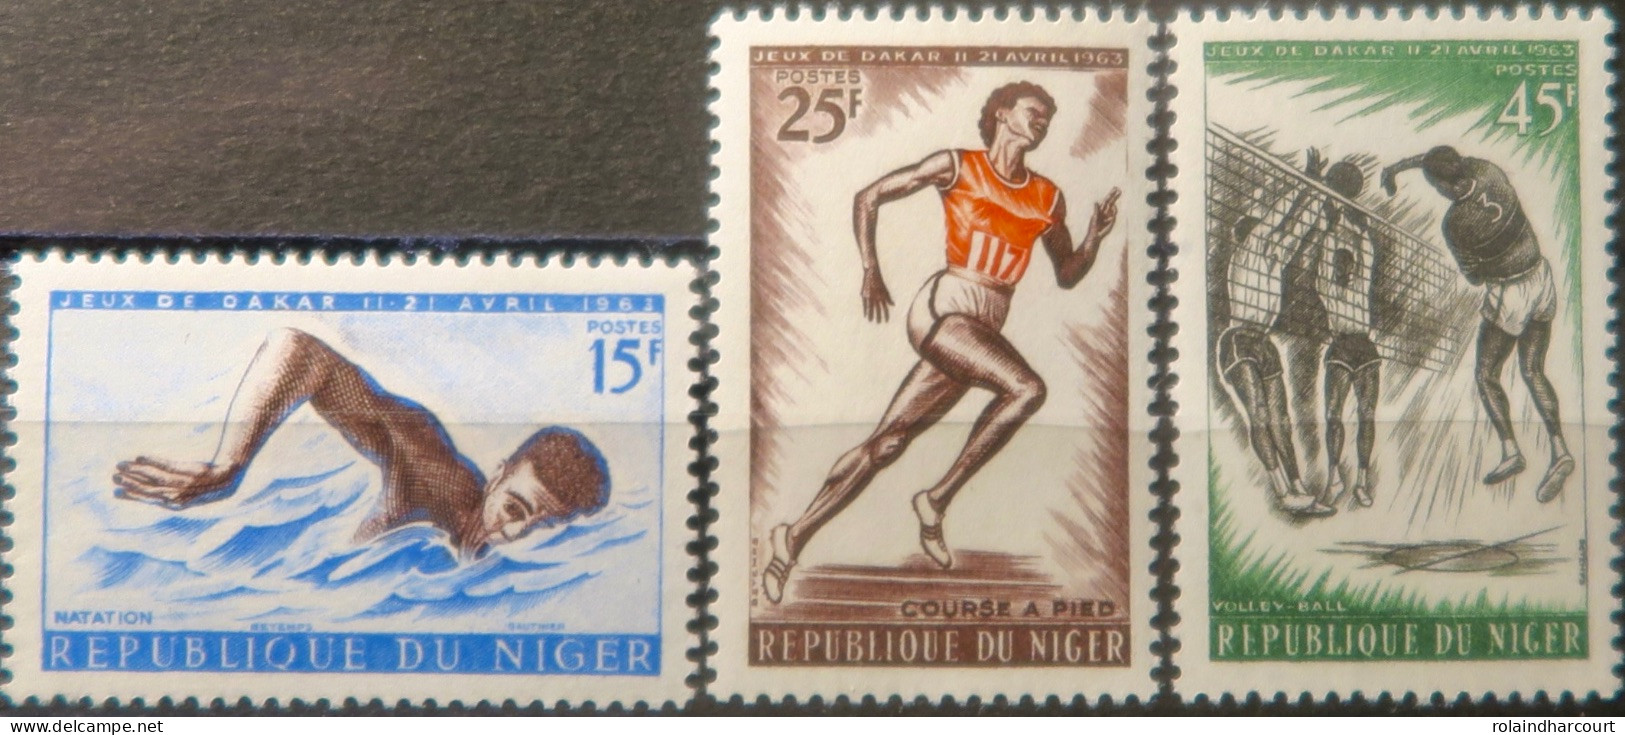 LP3844/2274 - NIGER - 1963 - Jeux Sportifs à Dakar - SERIE COMPLETE - N°120 à 122 NEUFS** - Niger (1960-...)